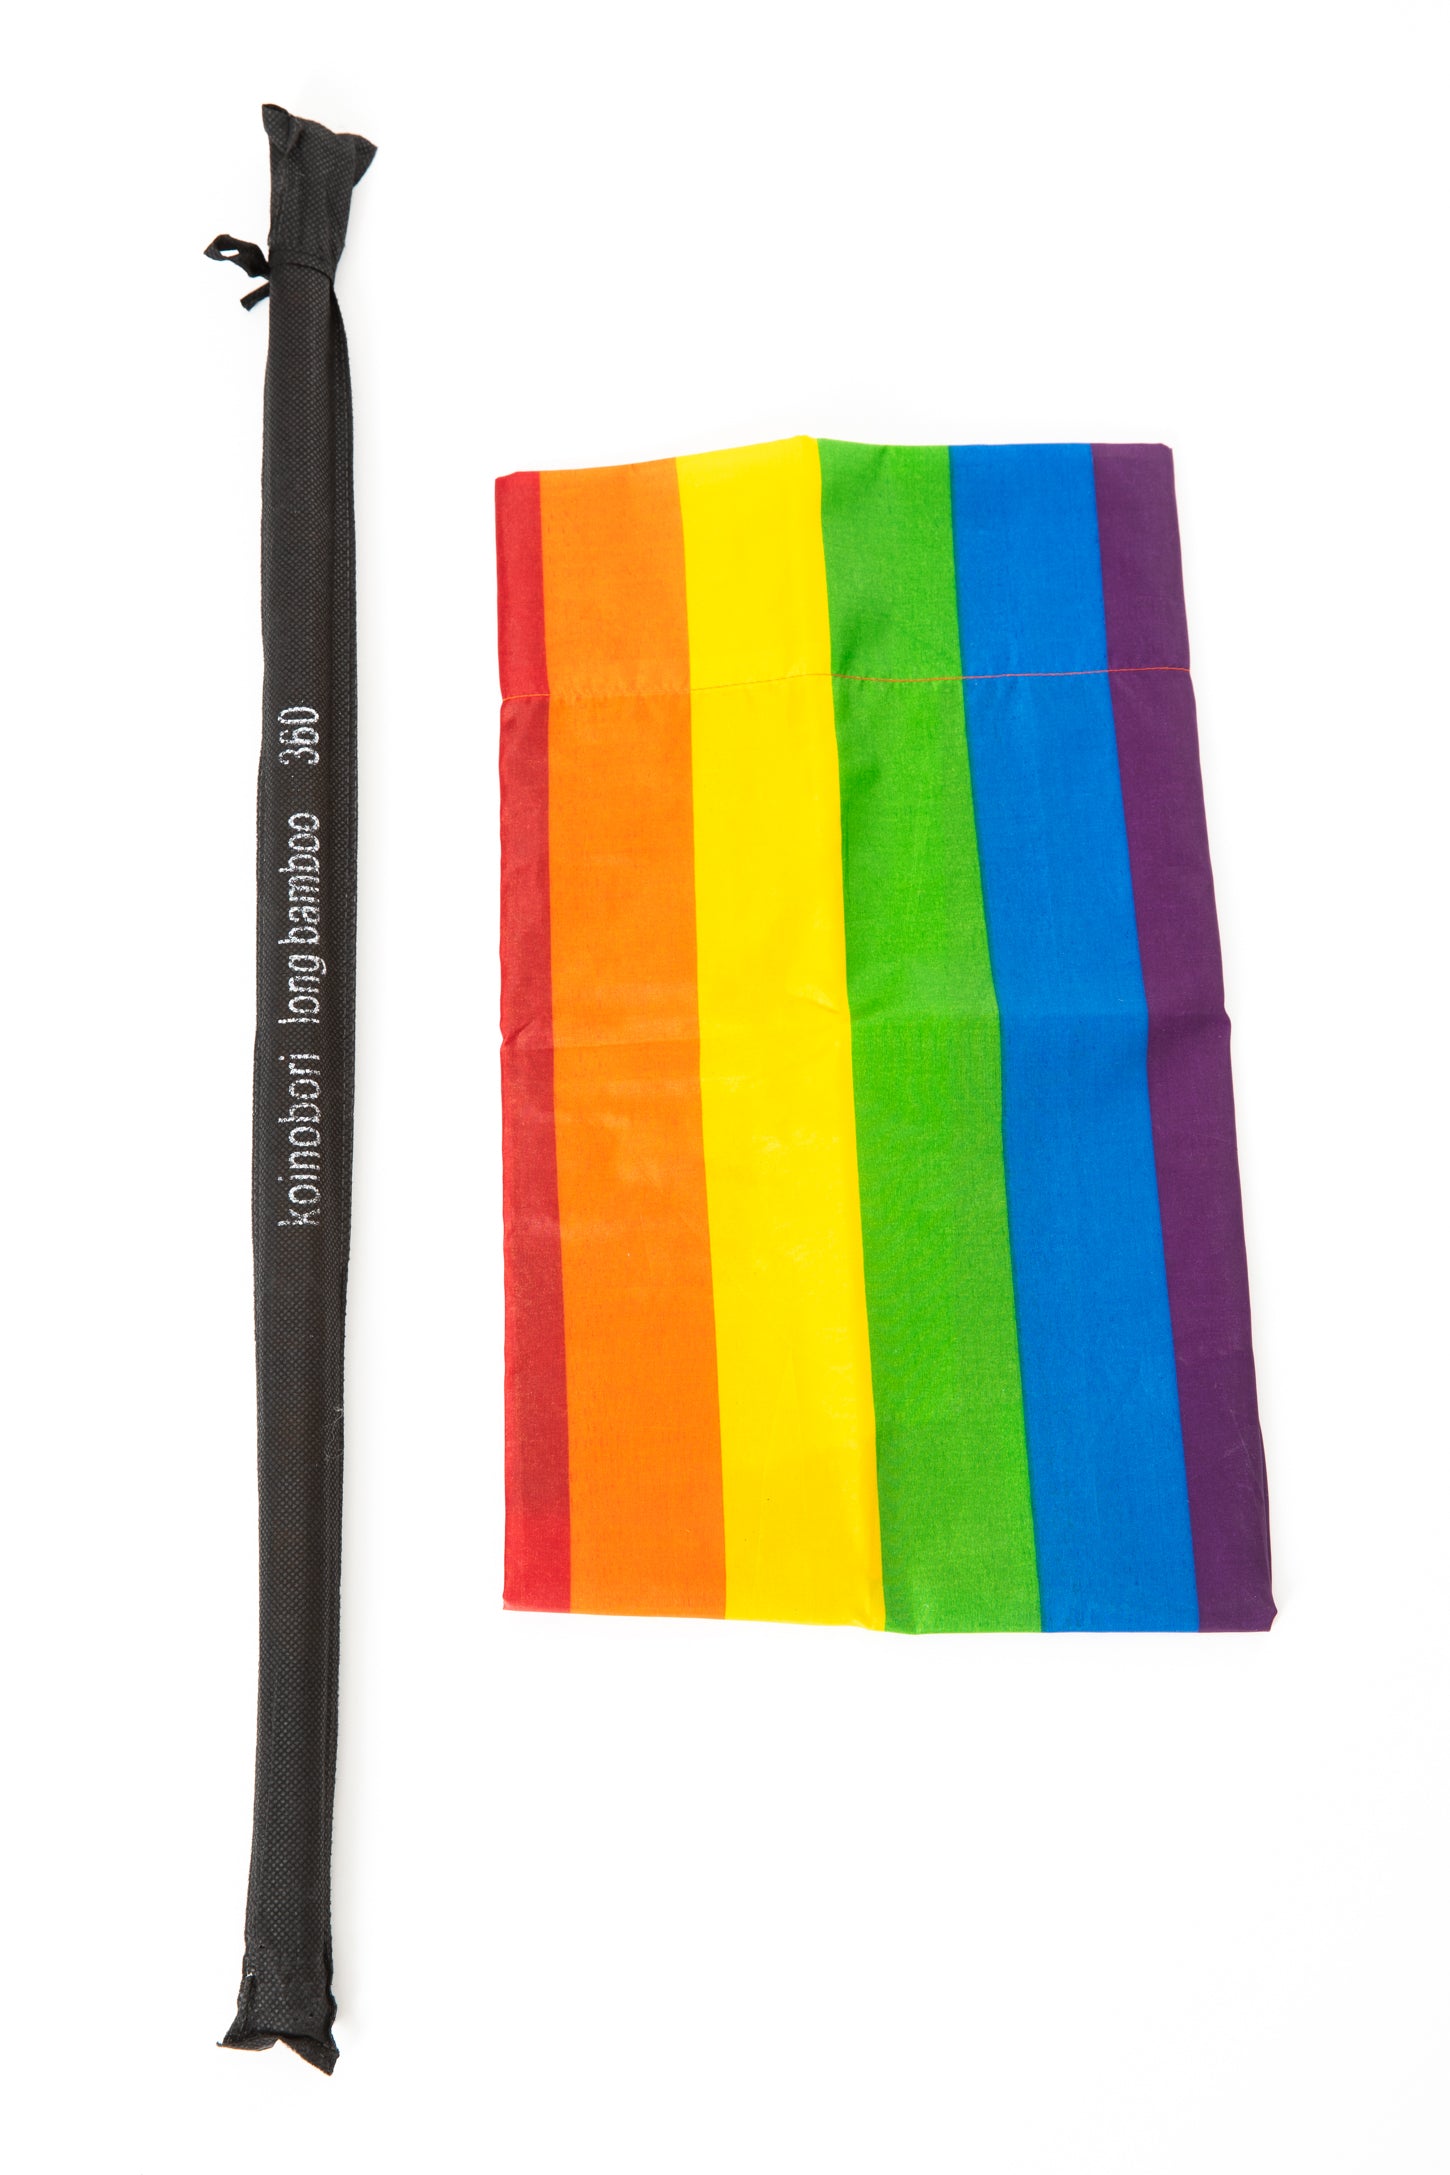 Pelangi Rainbow Flag with Telescoping Pole